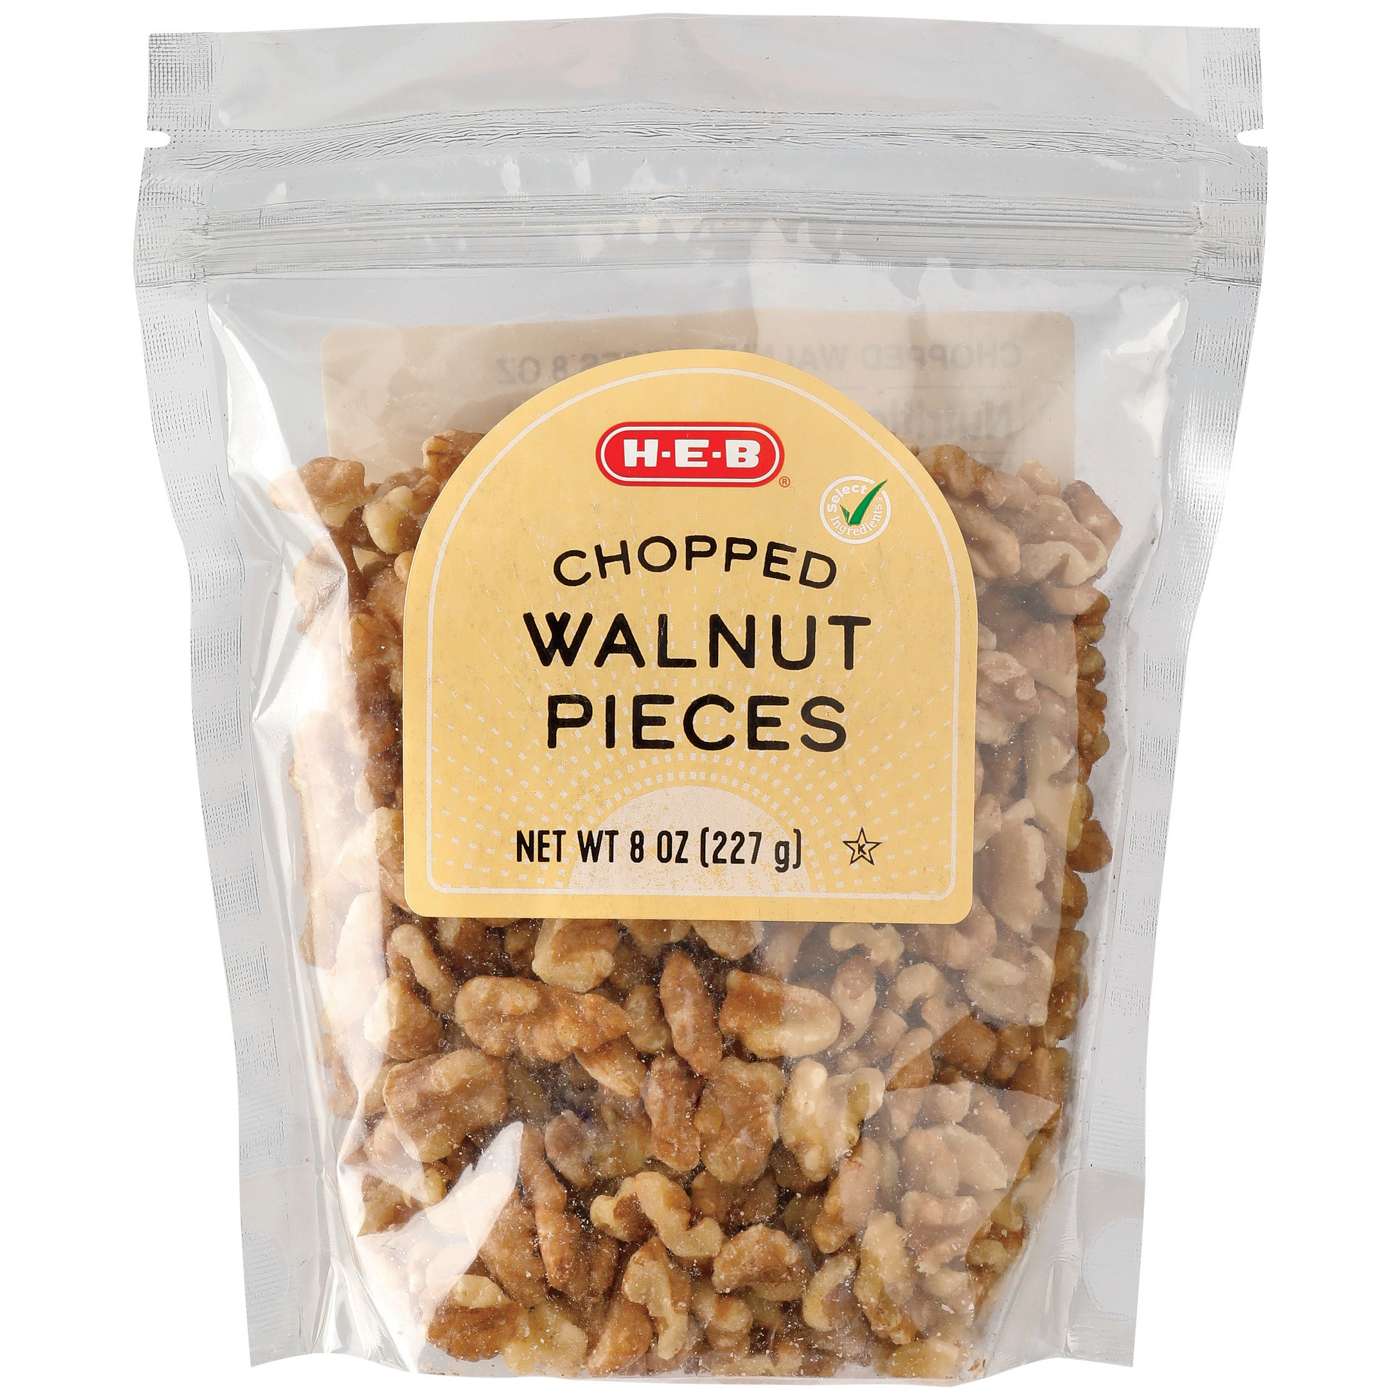 H-E-B Walnut Nugget; image 1 of 2